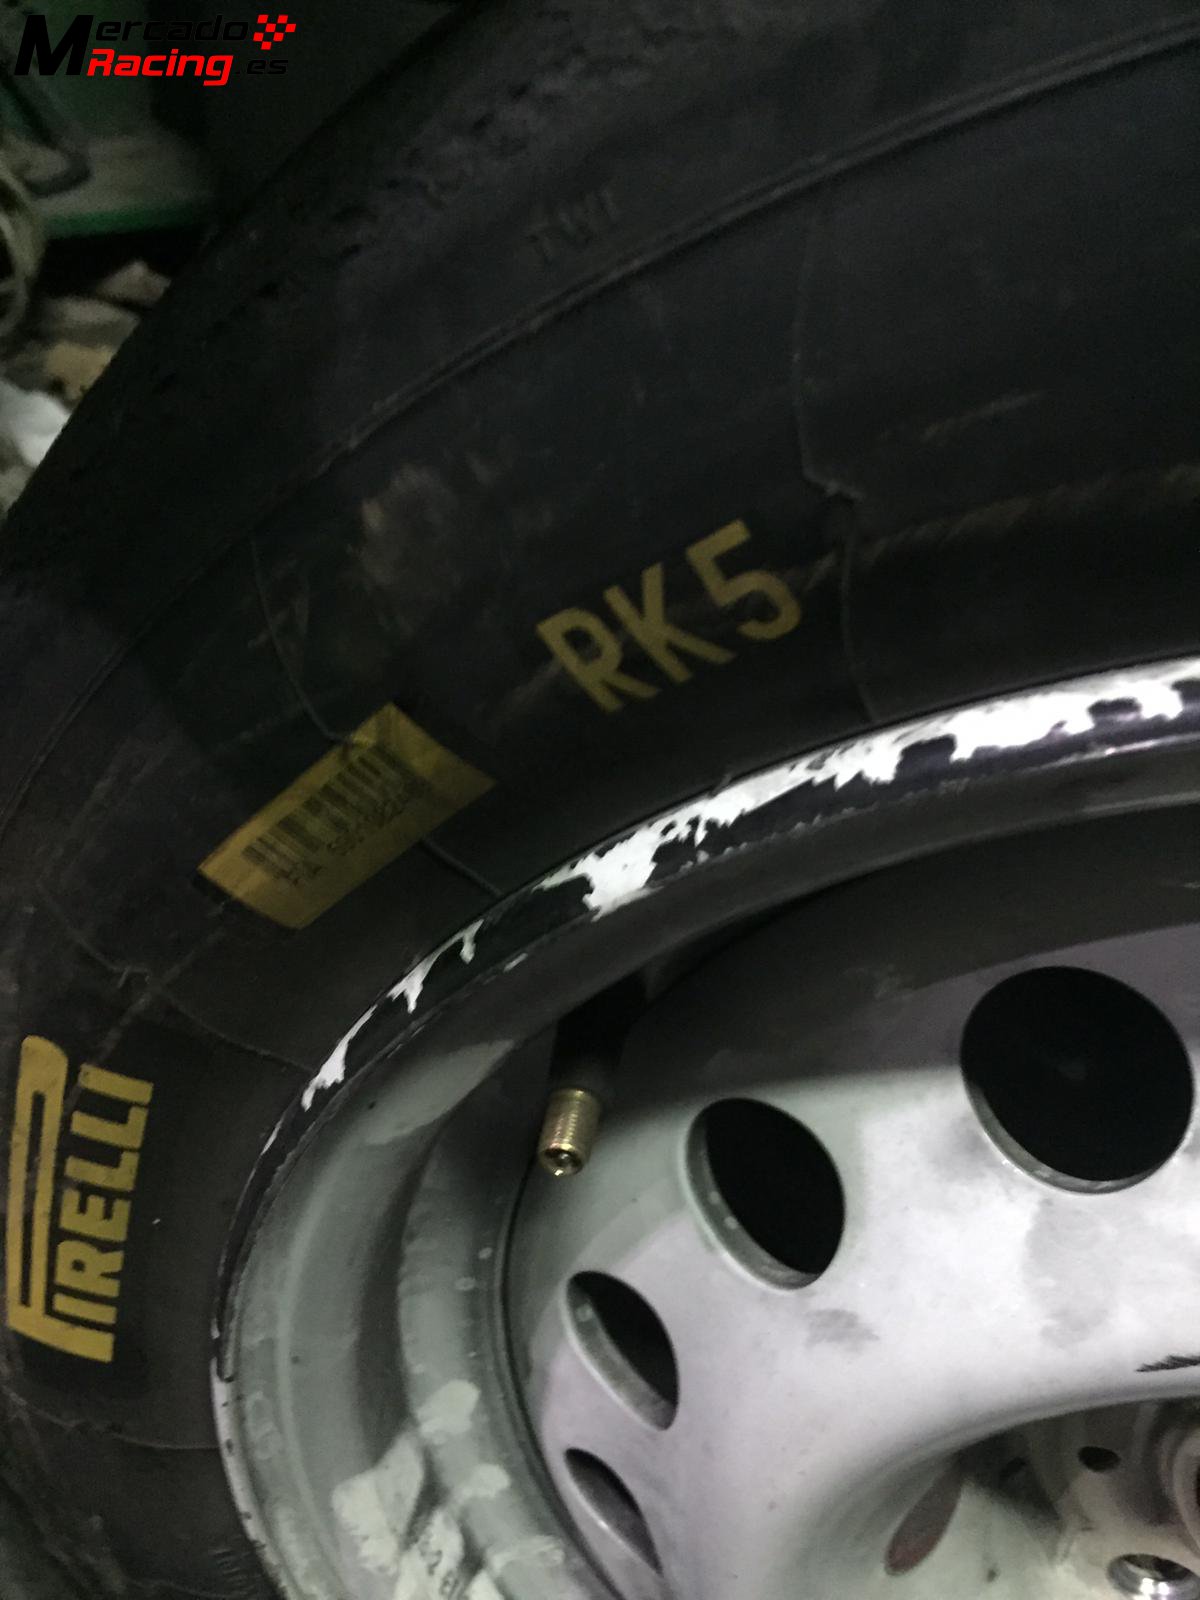 Pirelli rk5 (validas copas galicia)